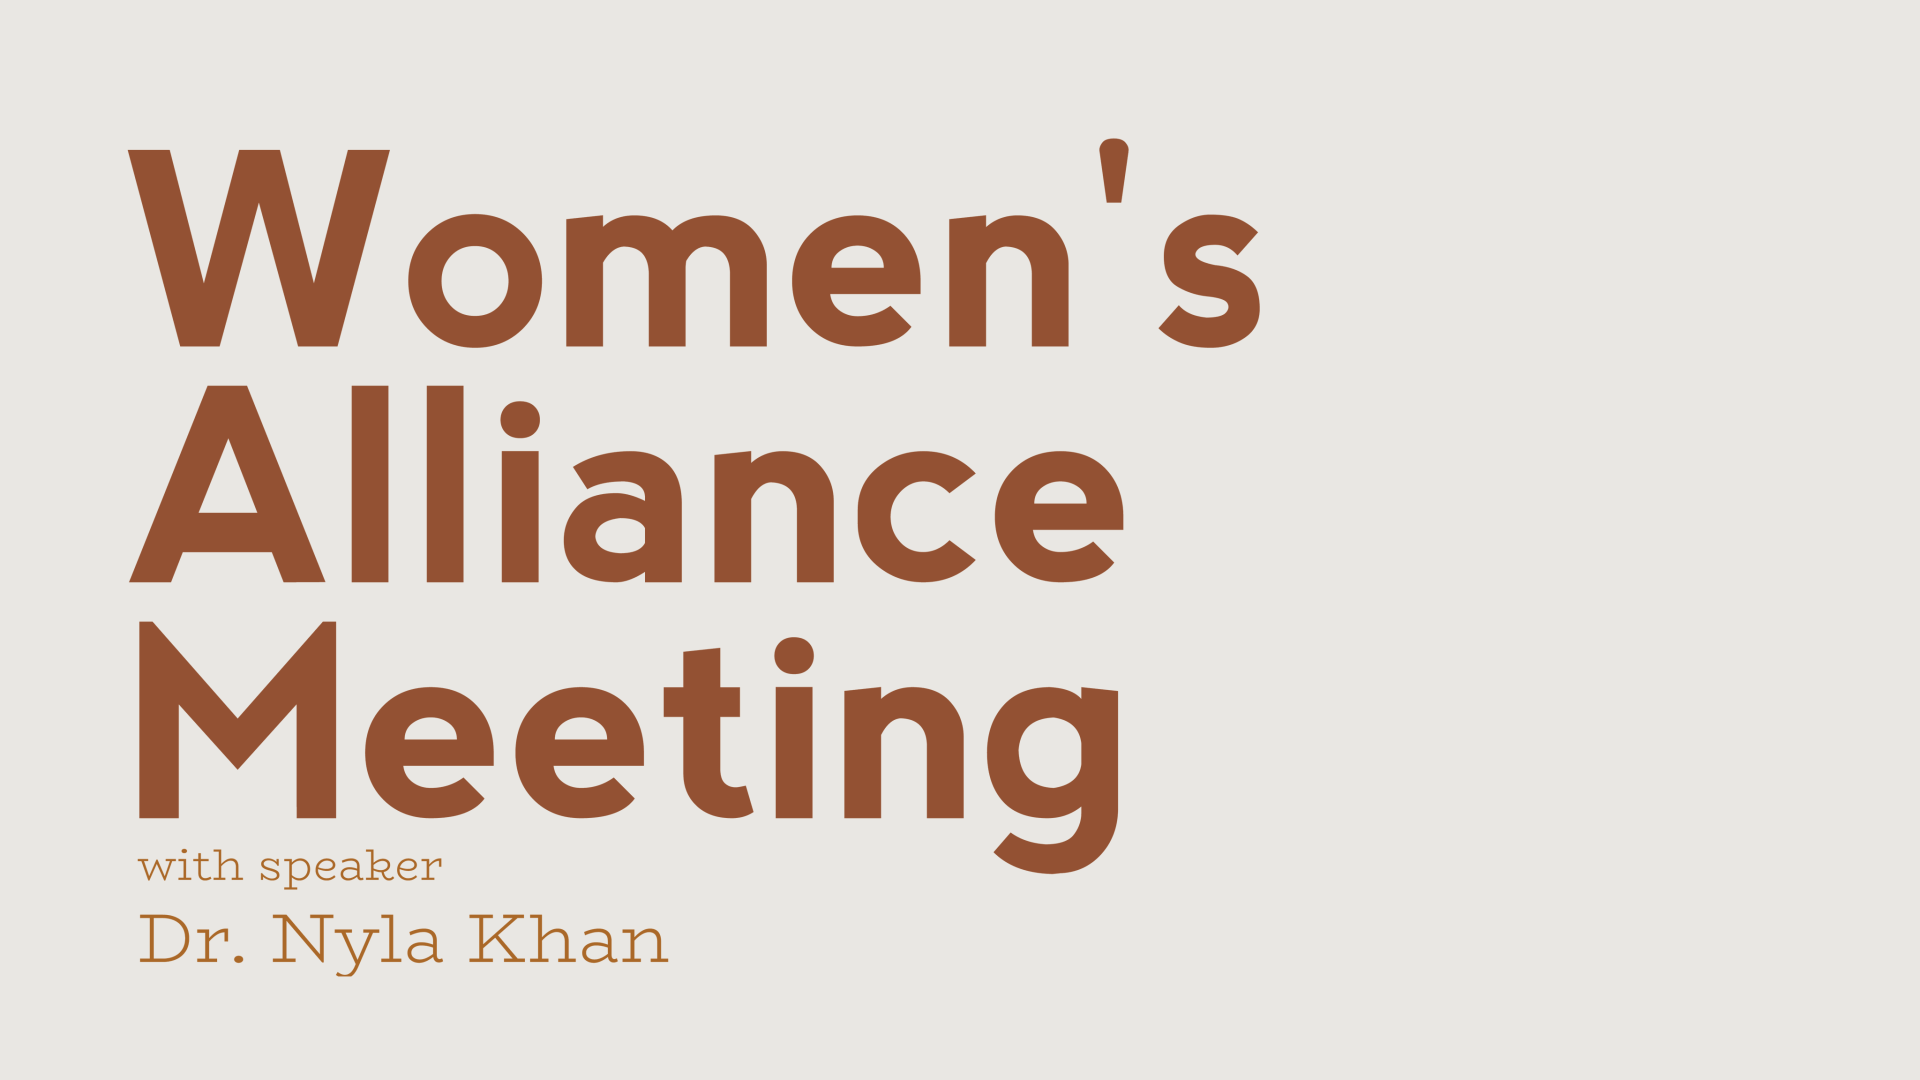 women's alliance meeting poster